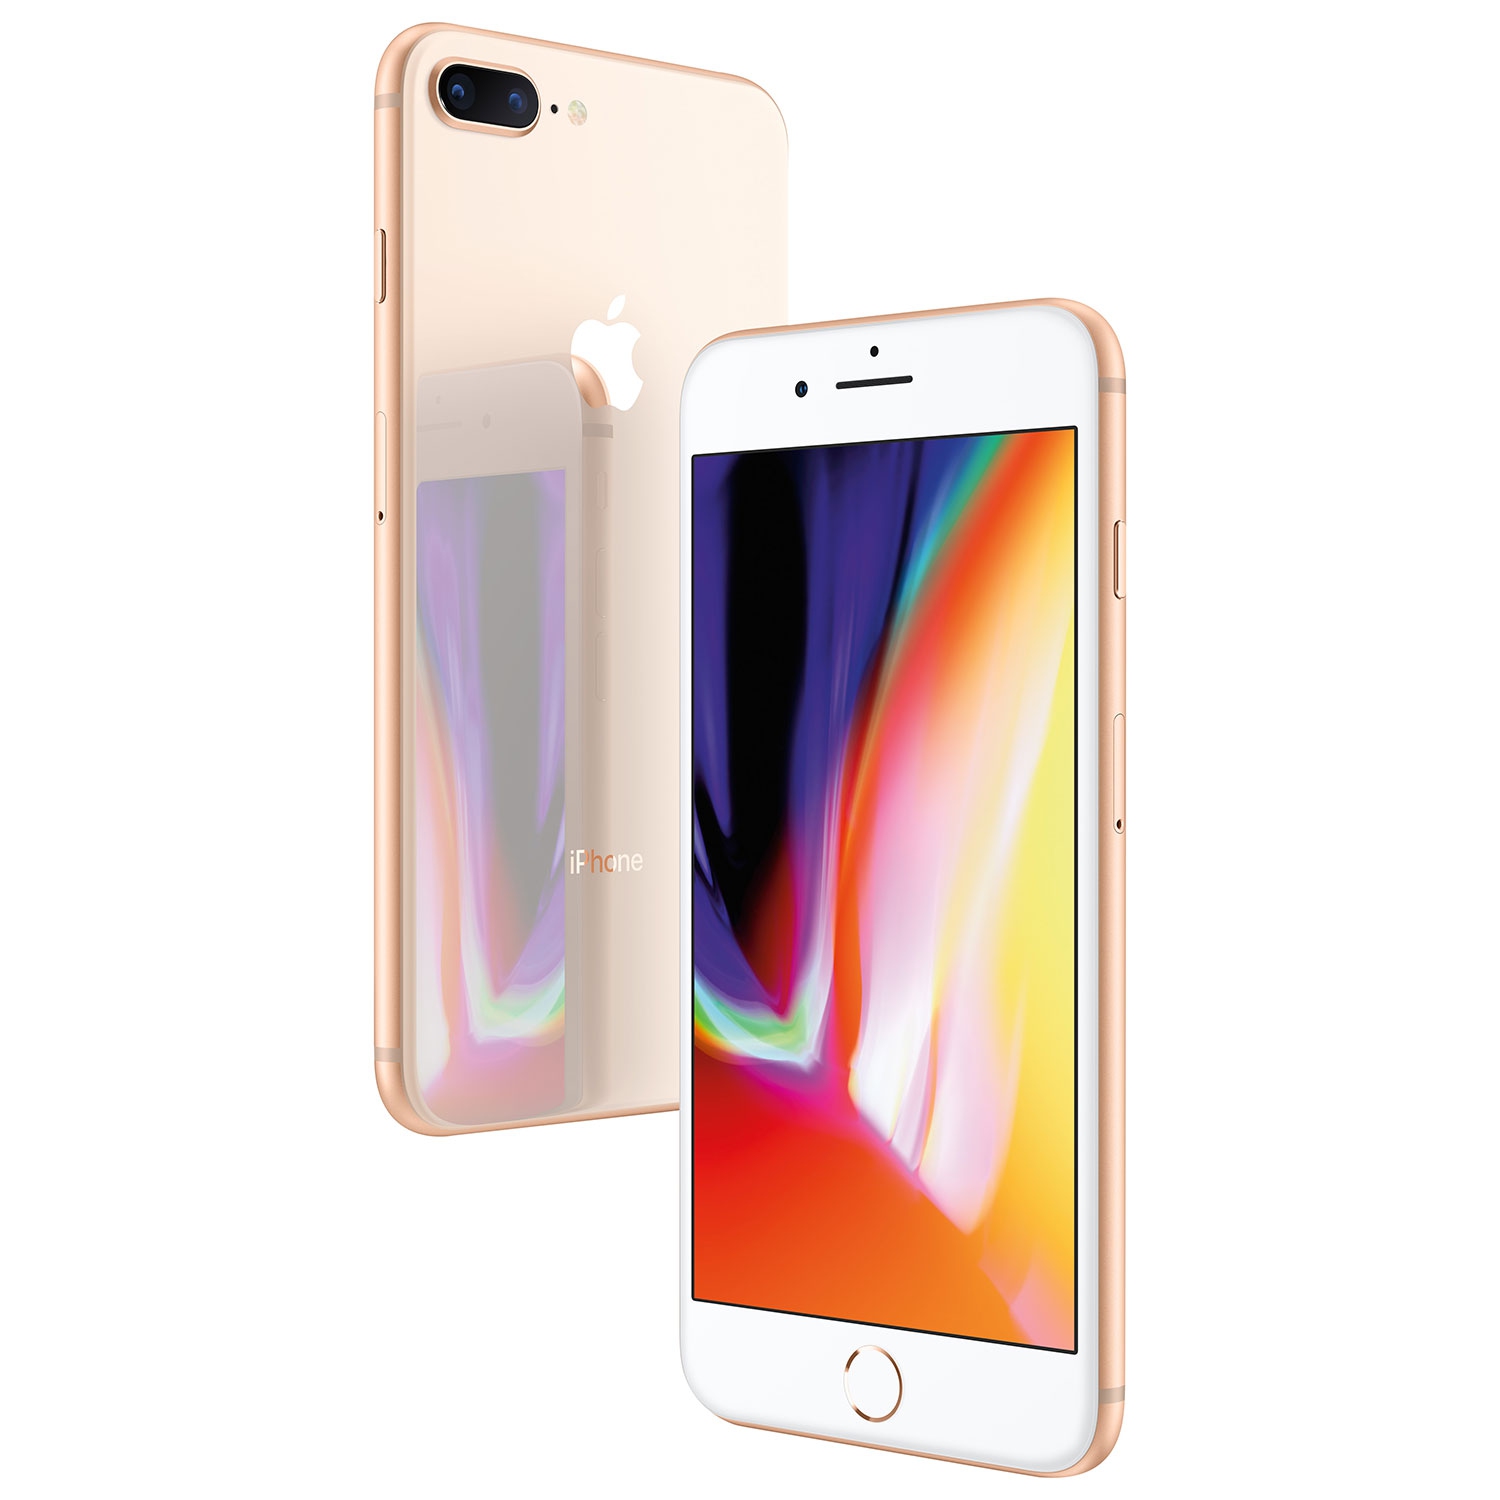 Refurbished (Excellent) - Apple iPhone 8 Plus 256GB Smartphone - Gold - Unlocked - Certified Refurbished